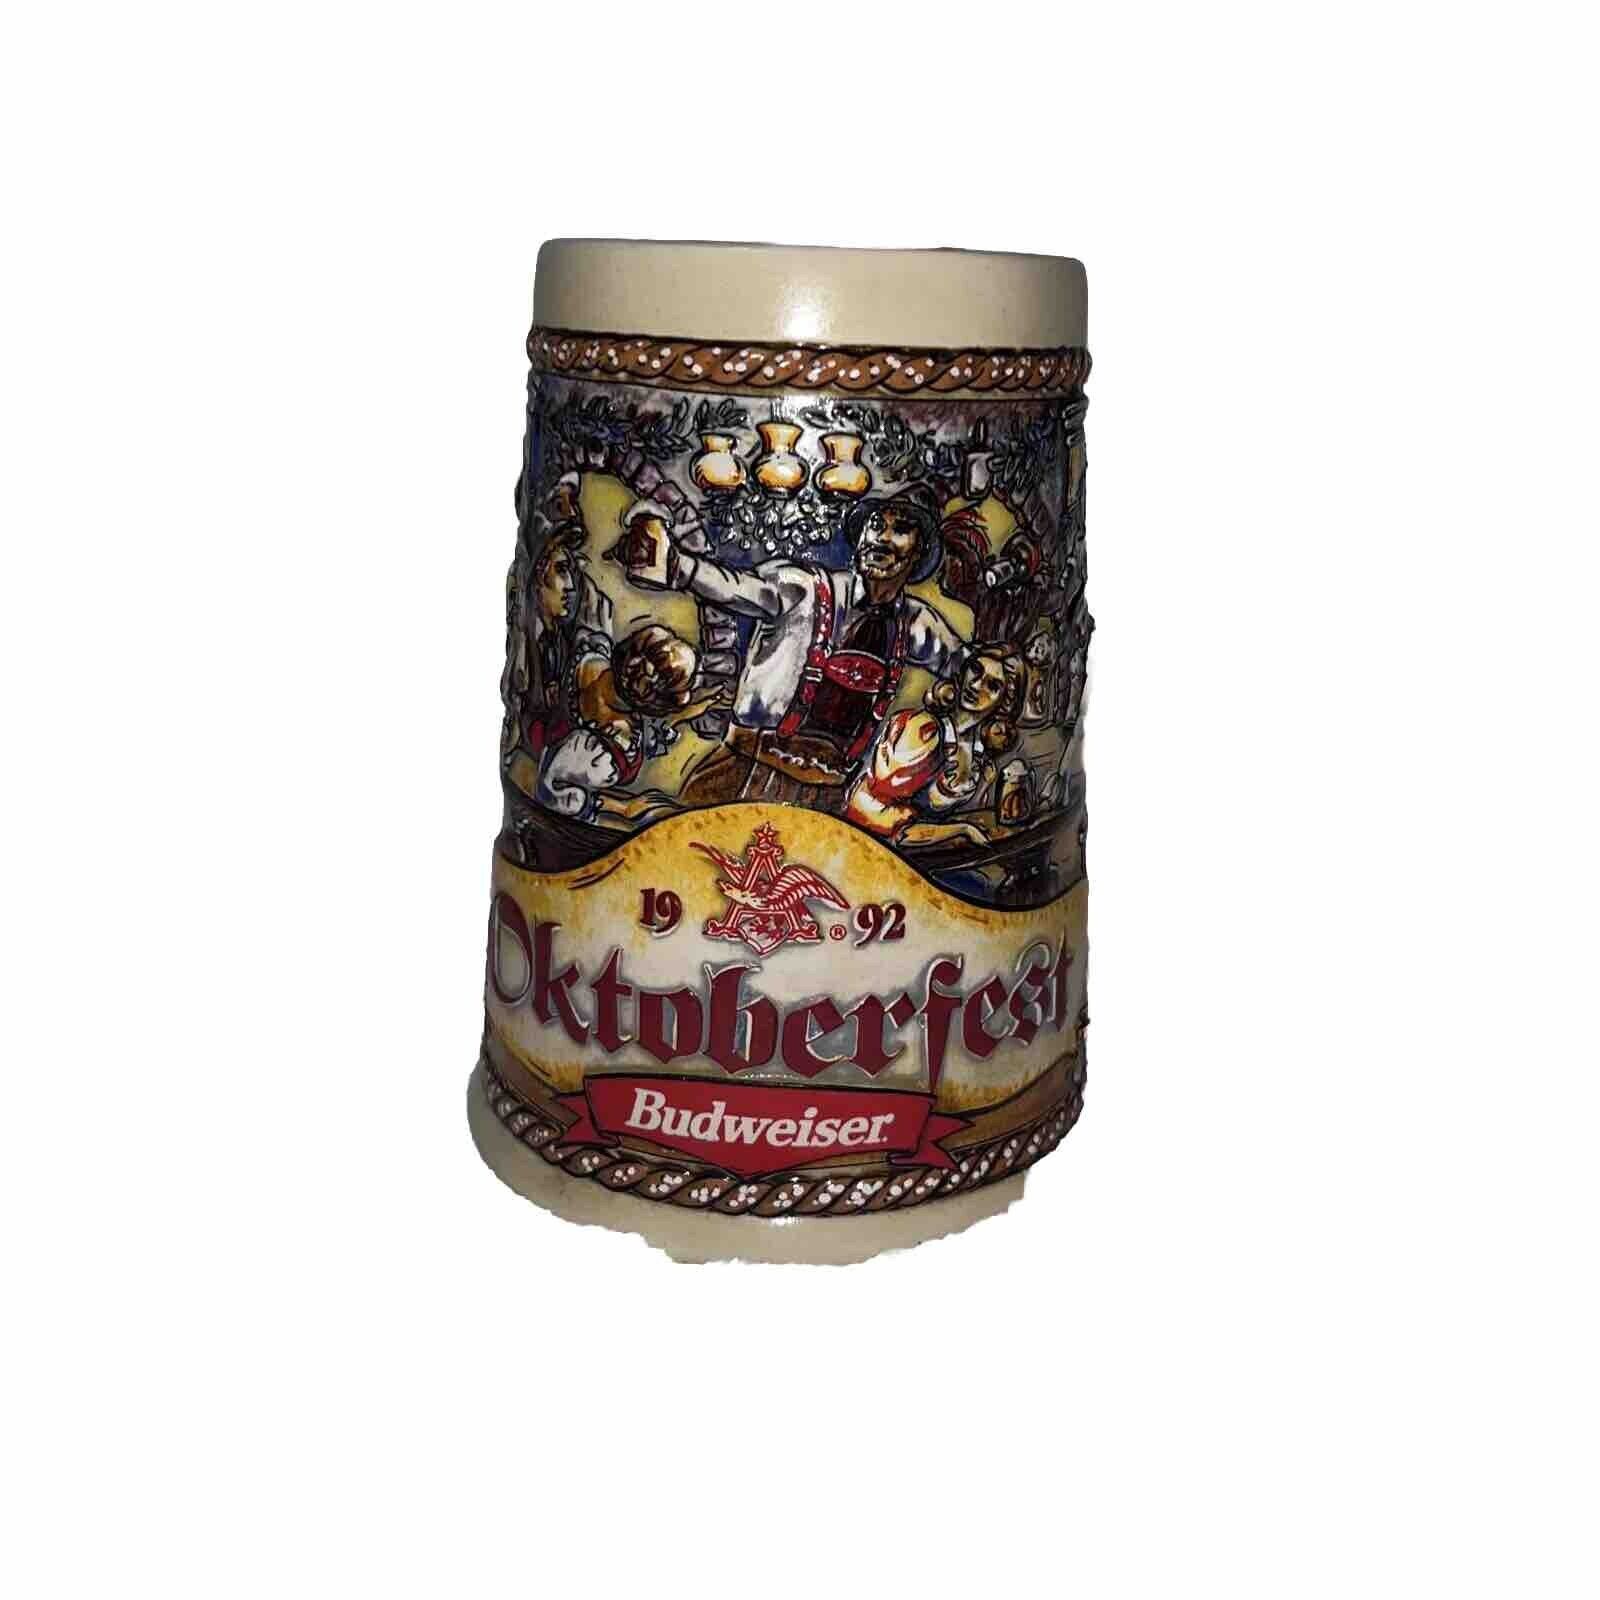 Budweiser Stein Item 01504 Oktoberfest 1992 Edition